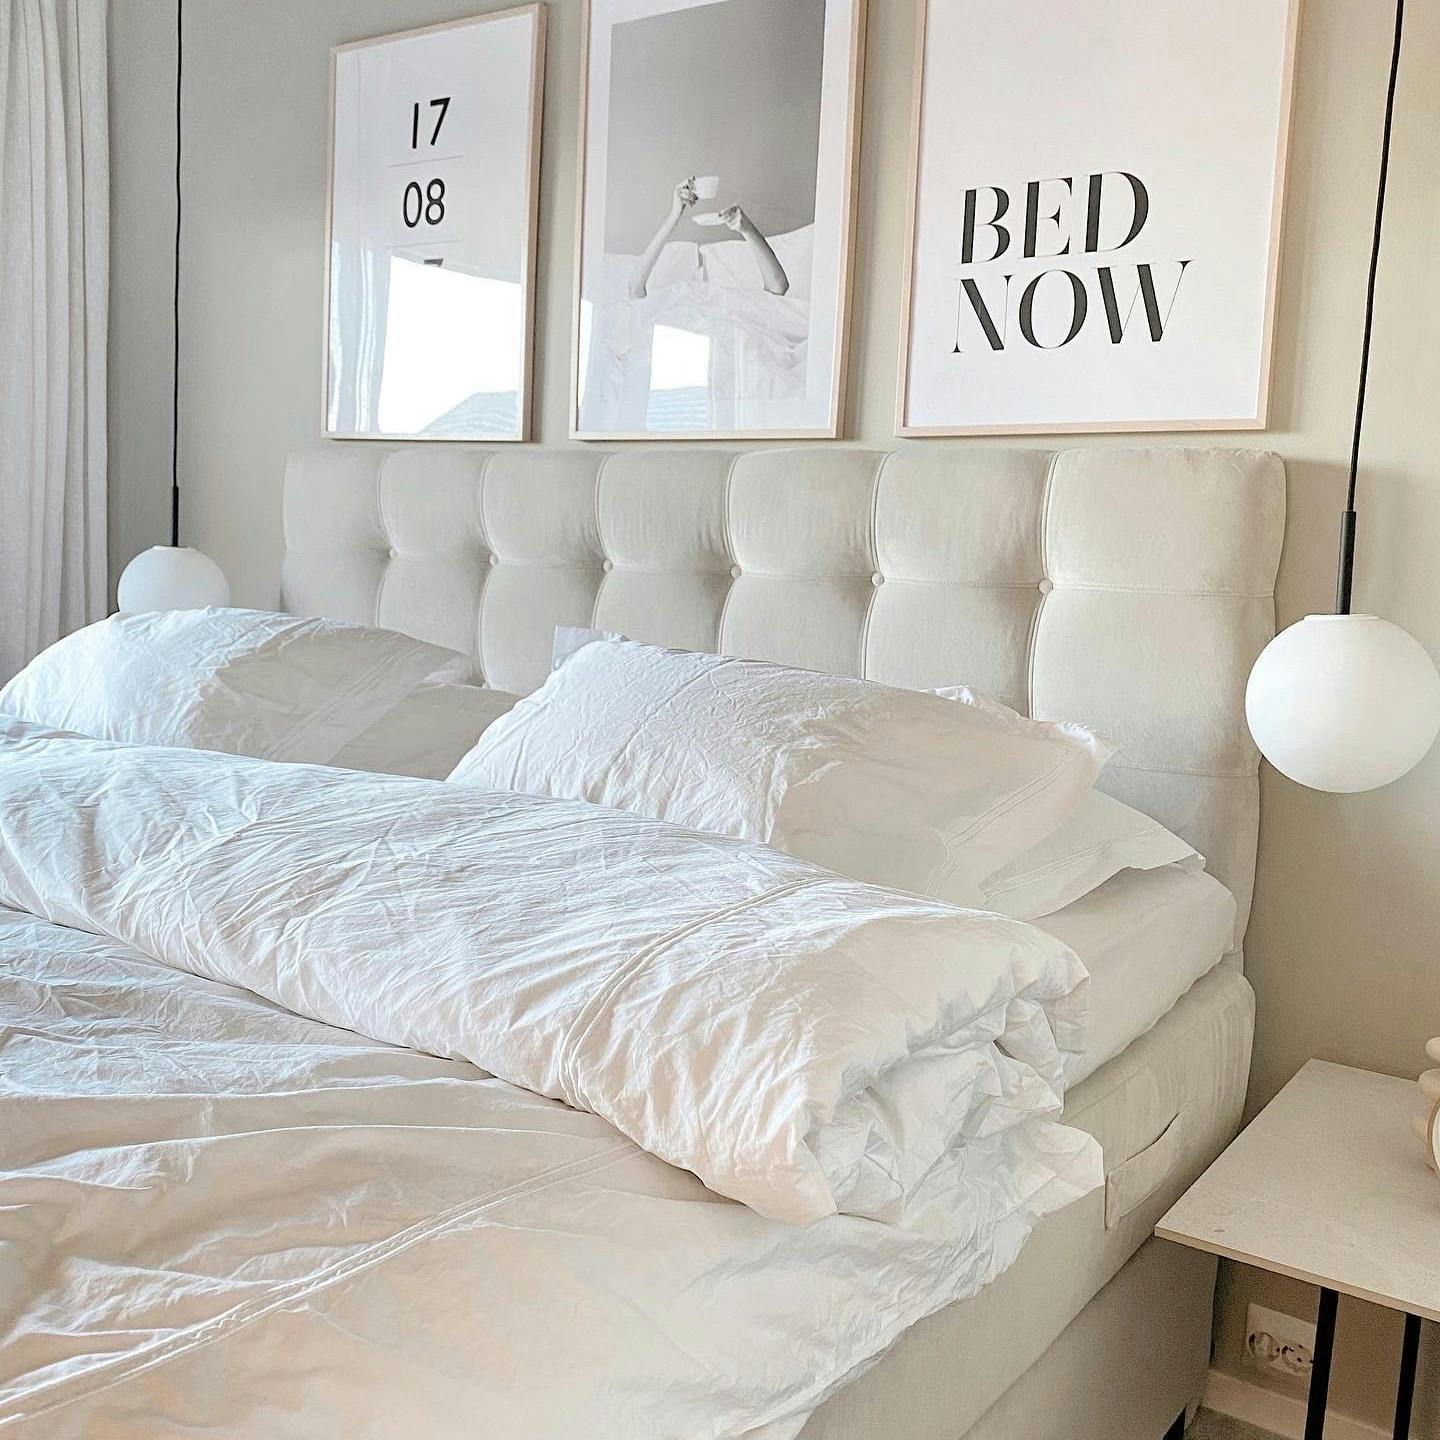 Hög dubbelsäng, 180x200cm, med beige polyestersammet på stommen med en djuphäftad sänggavel i beige polyestersammet.